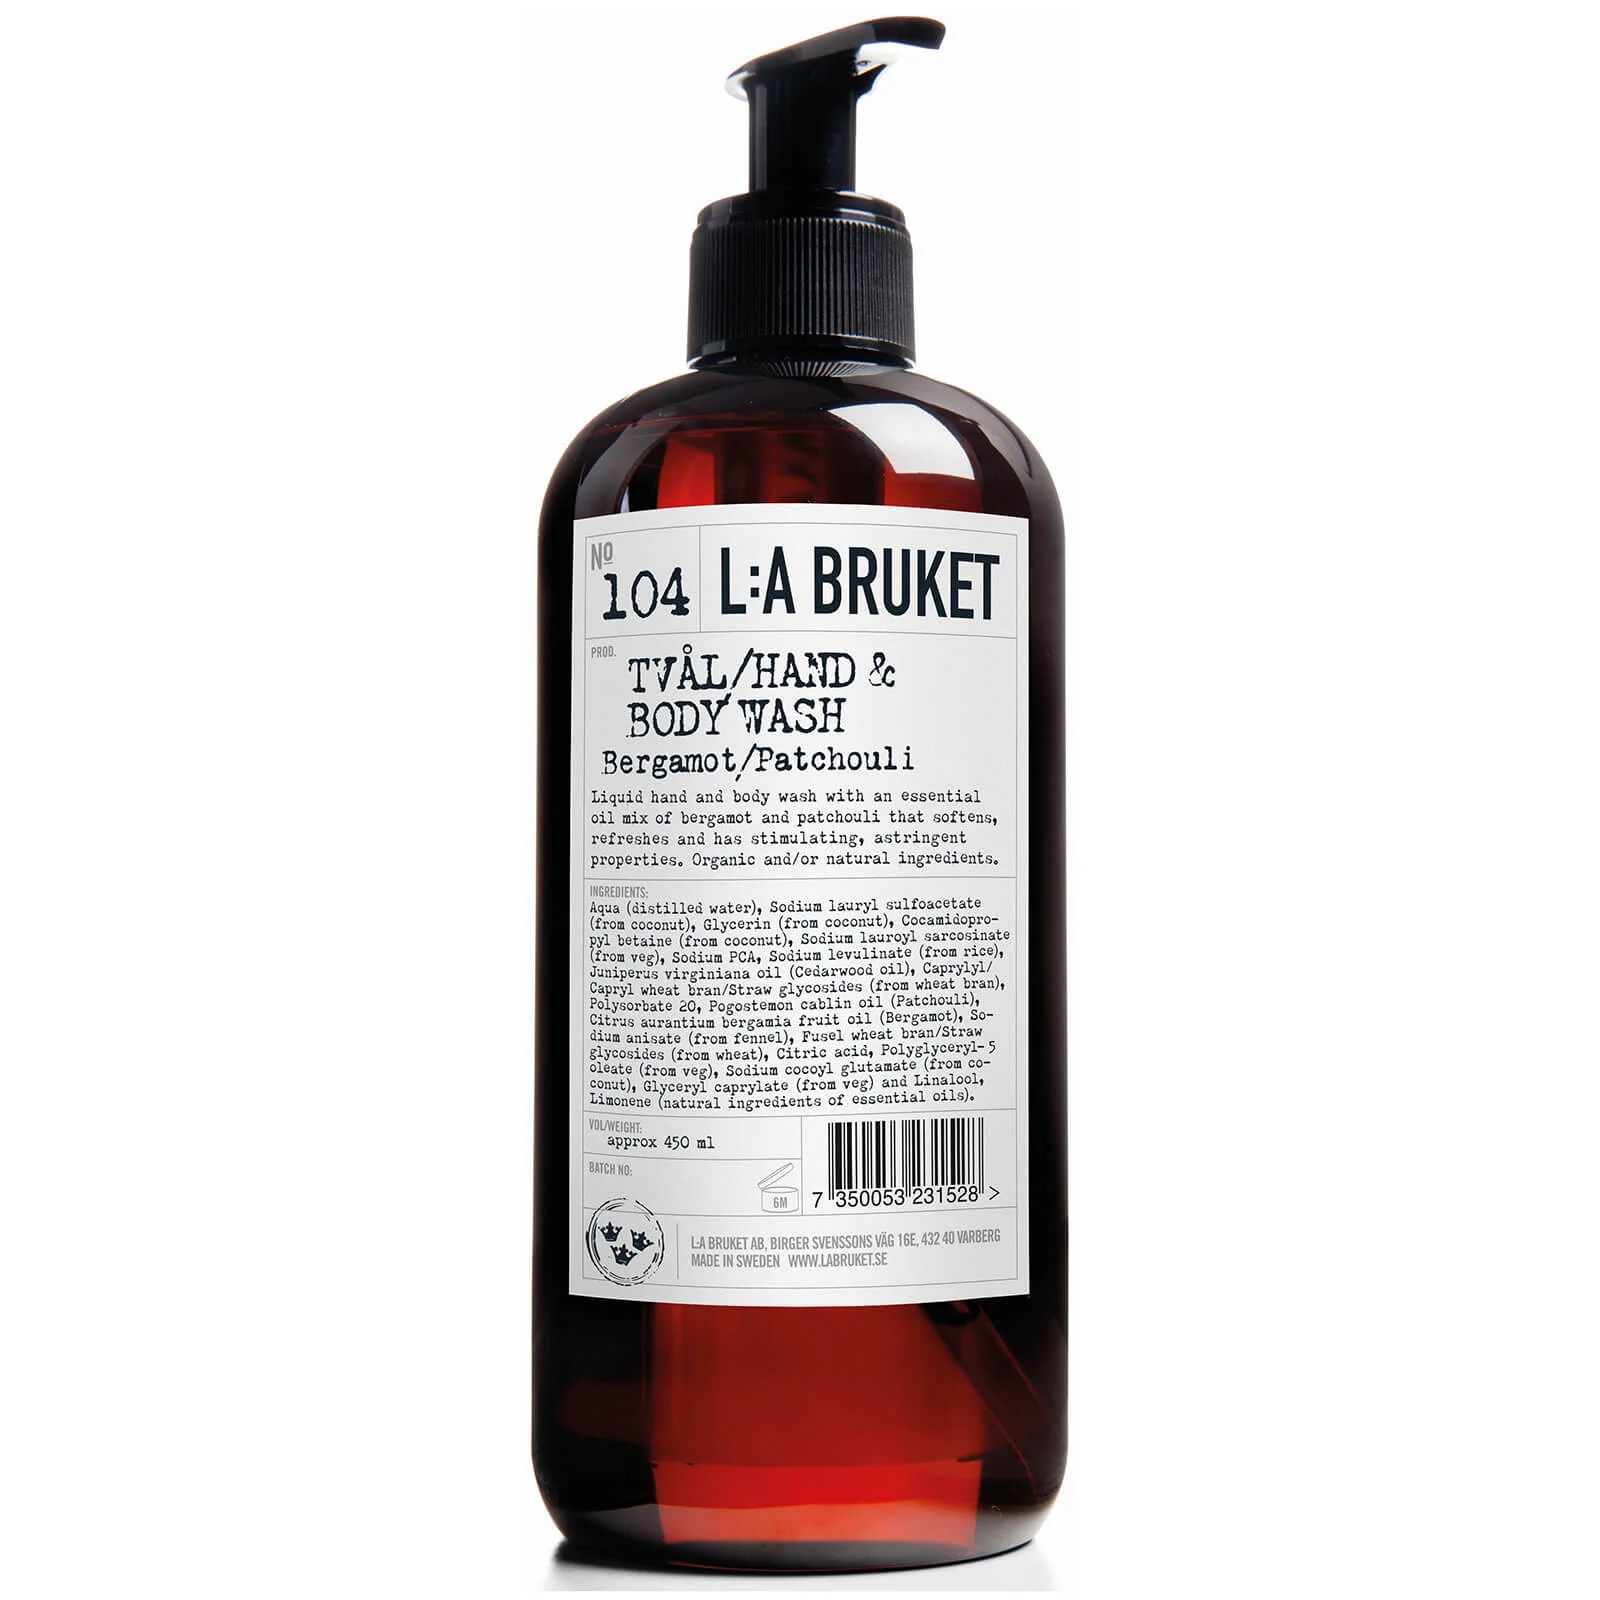 L:A BRUKET No. 104 Hand & Body Wash 450ml - Bergamot/Patchouli Image 1